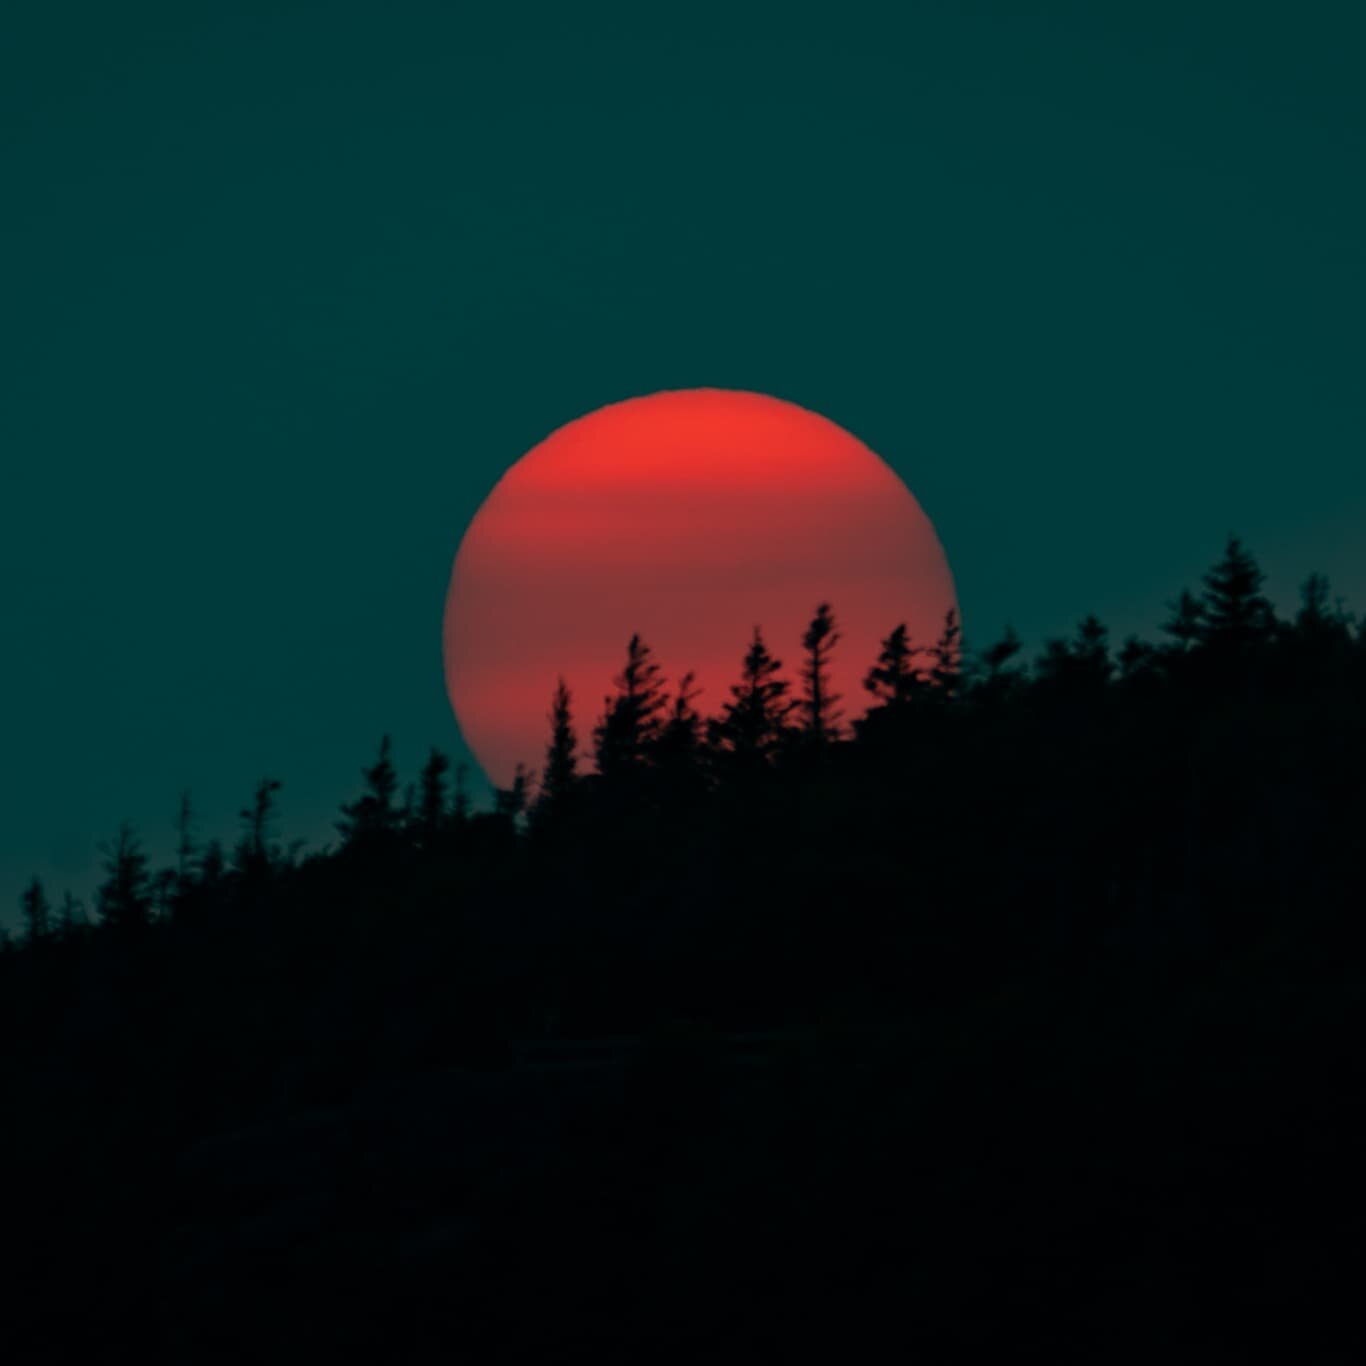 Sunset in Gros Morne National Park, Newfoundland #photooftheday #photography #sunset #naturephotography #gorgeous #instapic #picoftheday #sun #forest #forestphotography #mountains #newfoundland #hiking